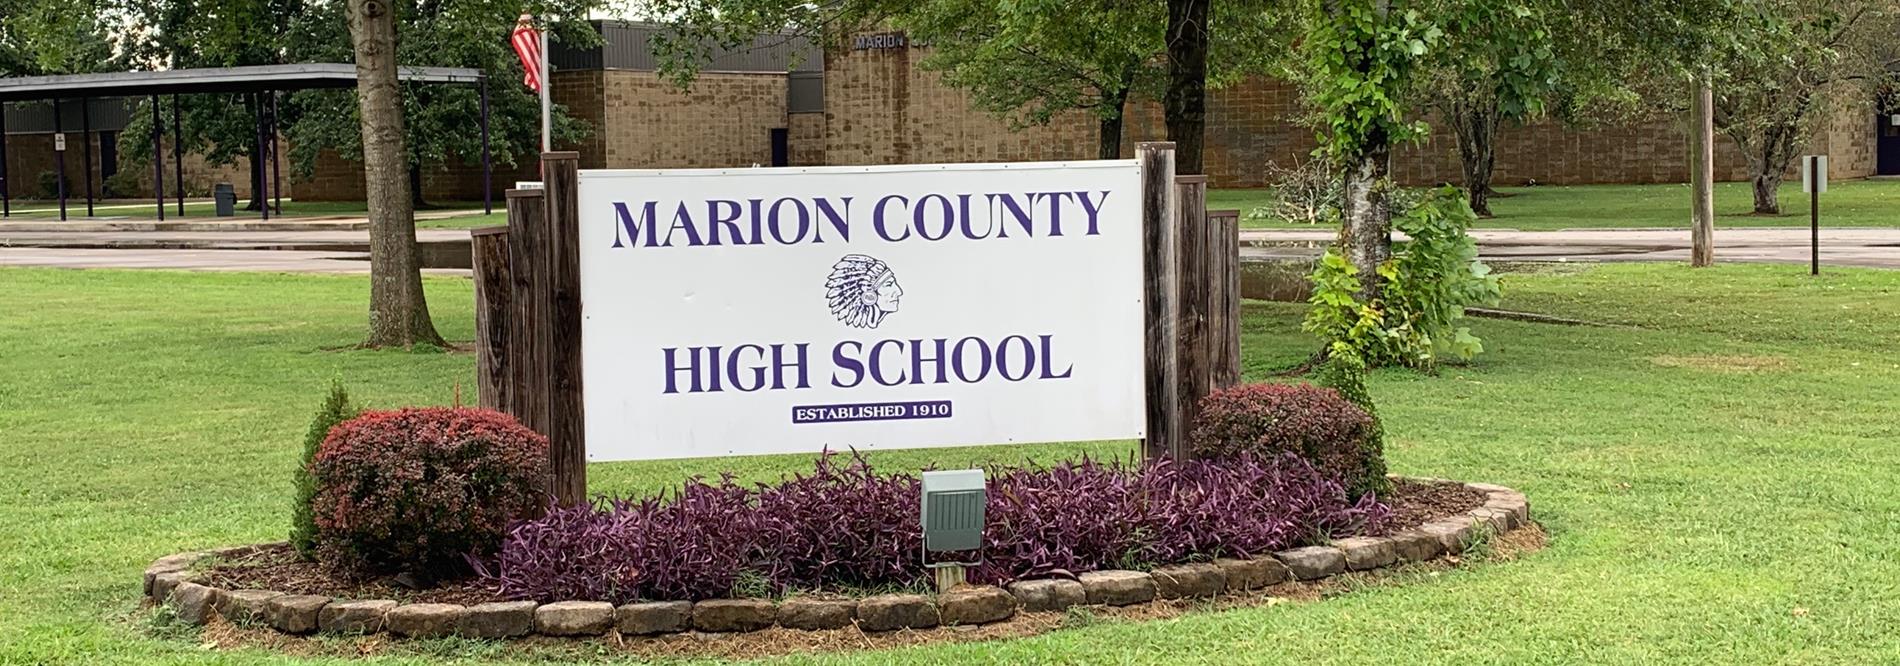 Marion County High School